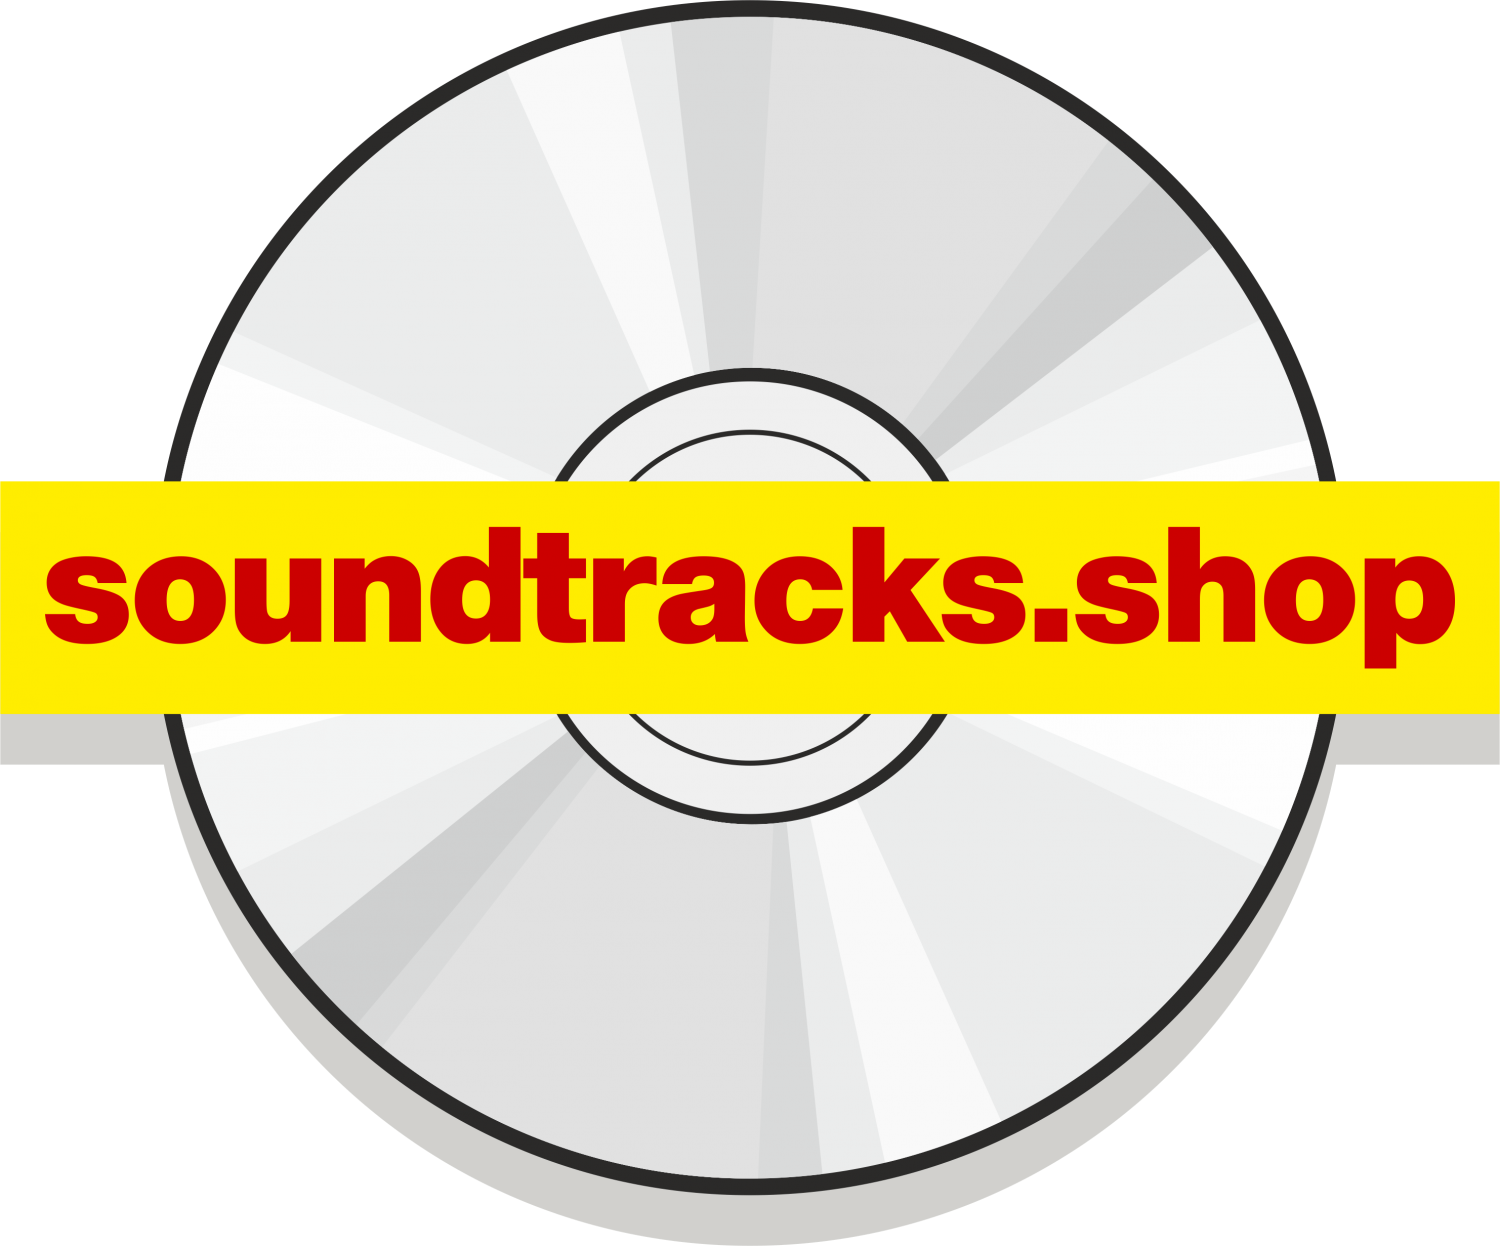 soundtracks.shop (logo)